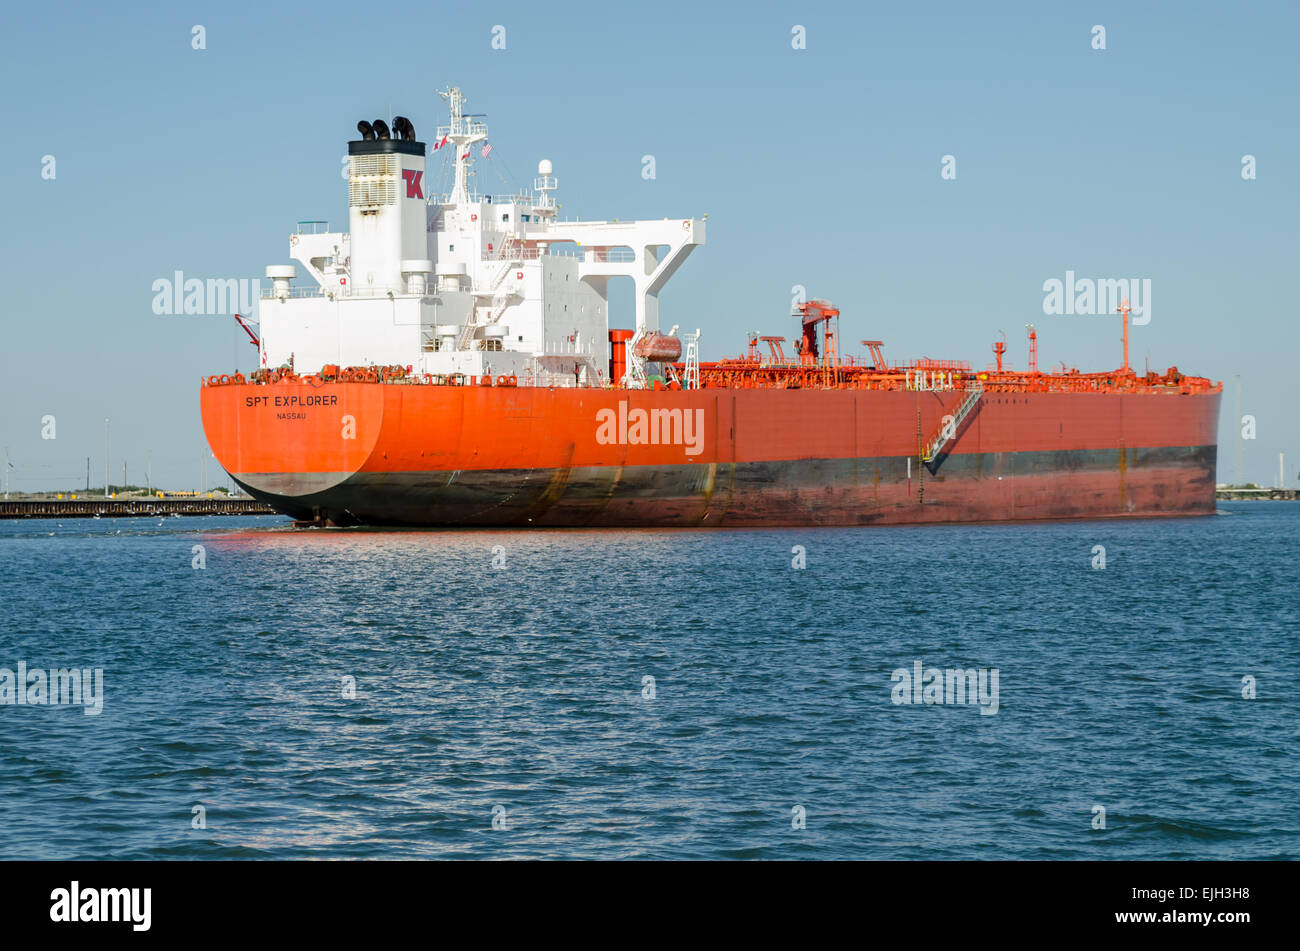 SPT EXPLORER - CRUDE OIL TANKER Gross Tonnage: 57657 Built: 2008 Flag: BAHAMAS Home port: NASSAU Owner: Teekay Marine (Singapore Stock Photo